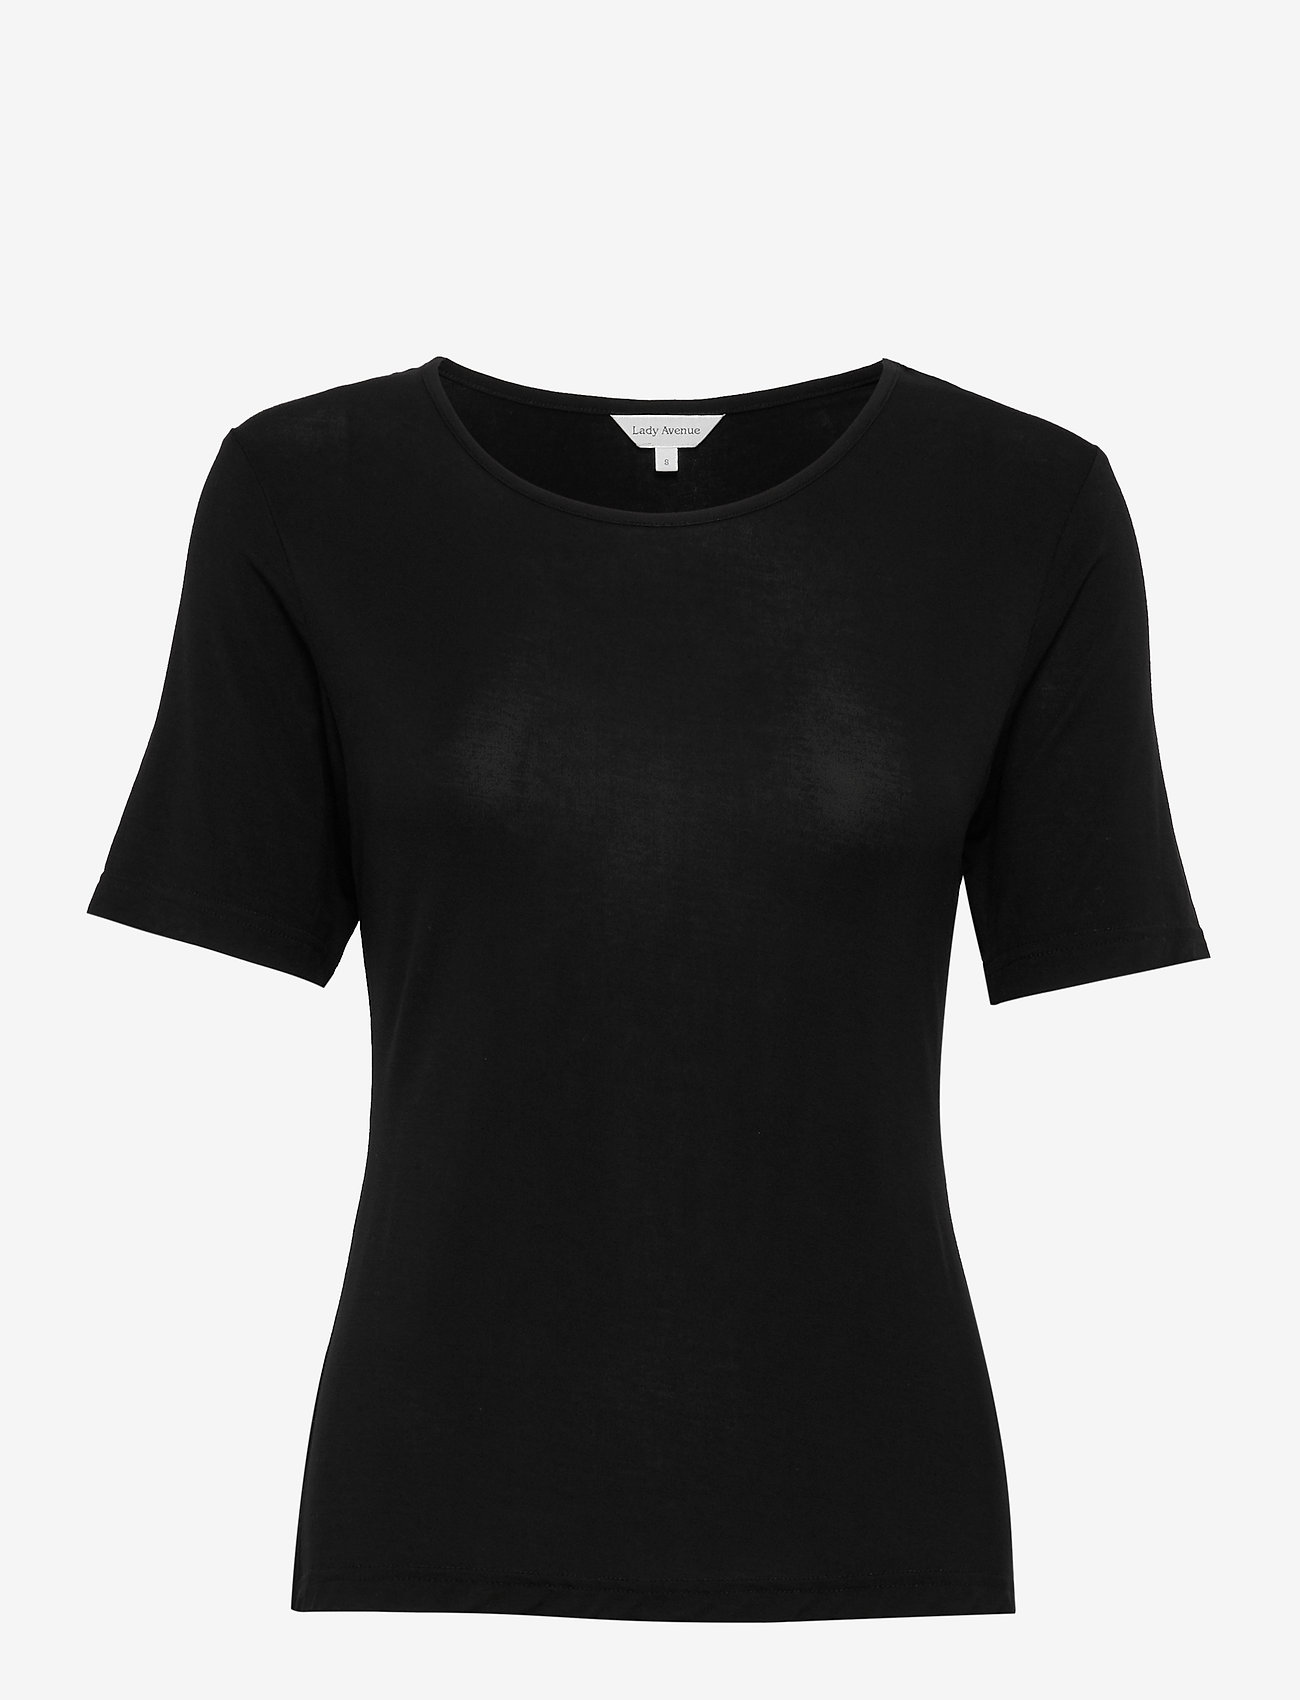 Lady Avenue - Bamboo - T-shirt with short sleeve - women - black - 0